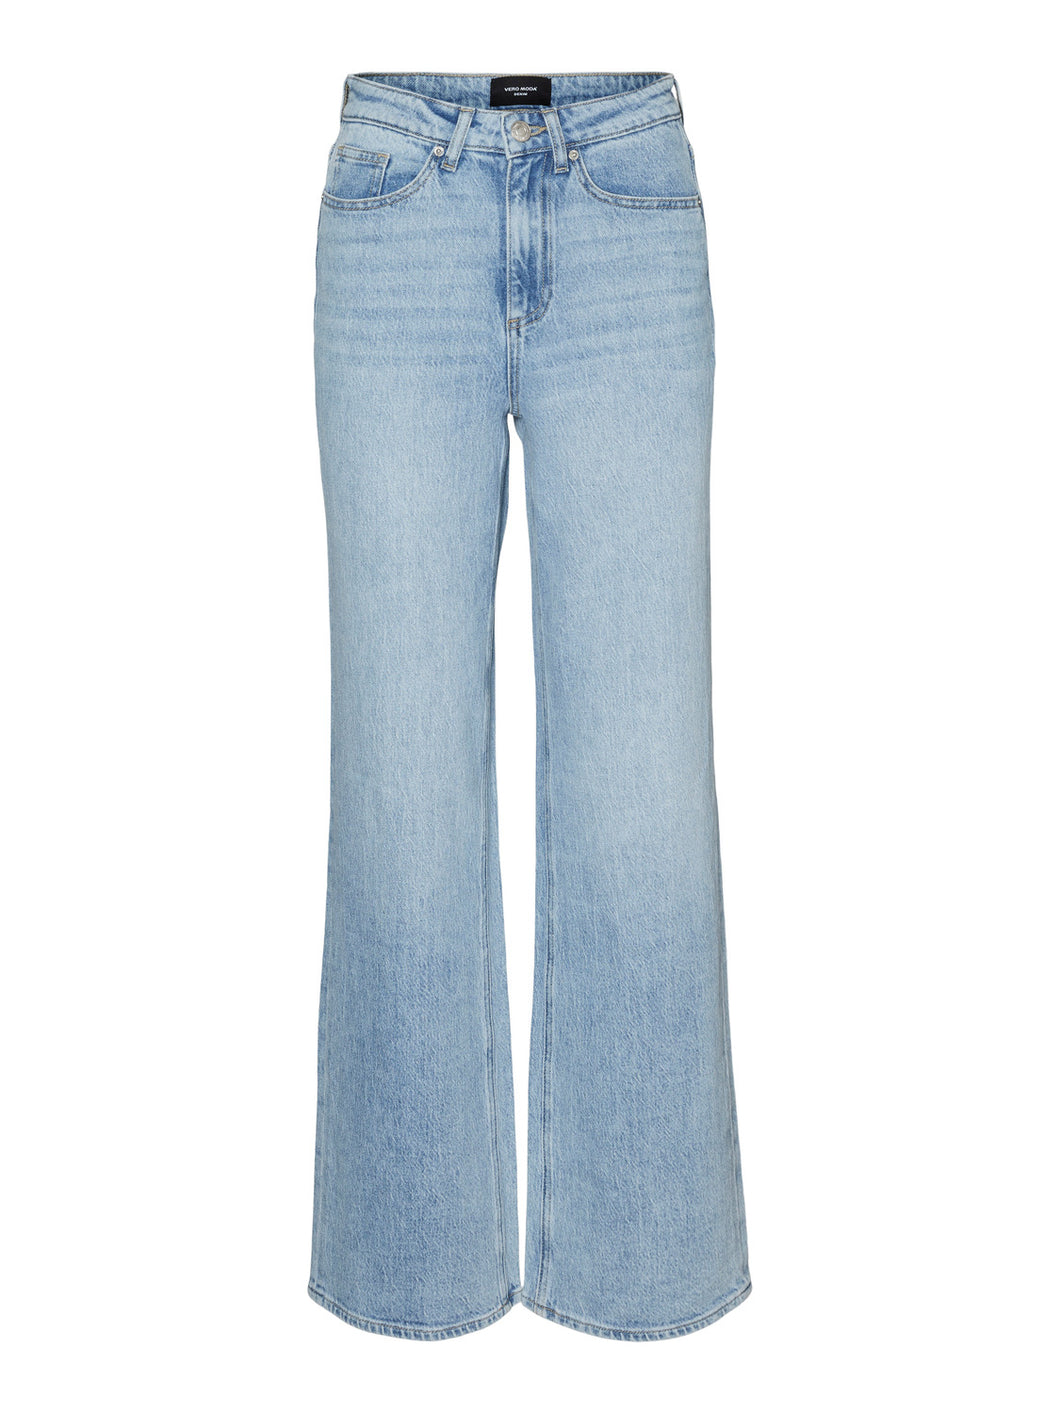 VMTESSA Jeans - Light Blue Denim